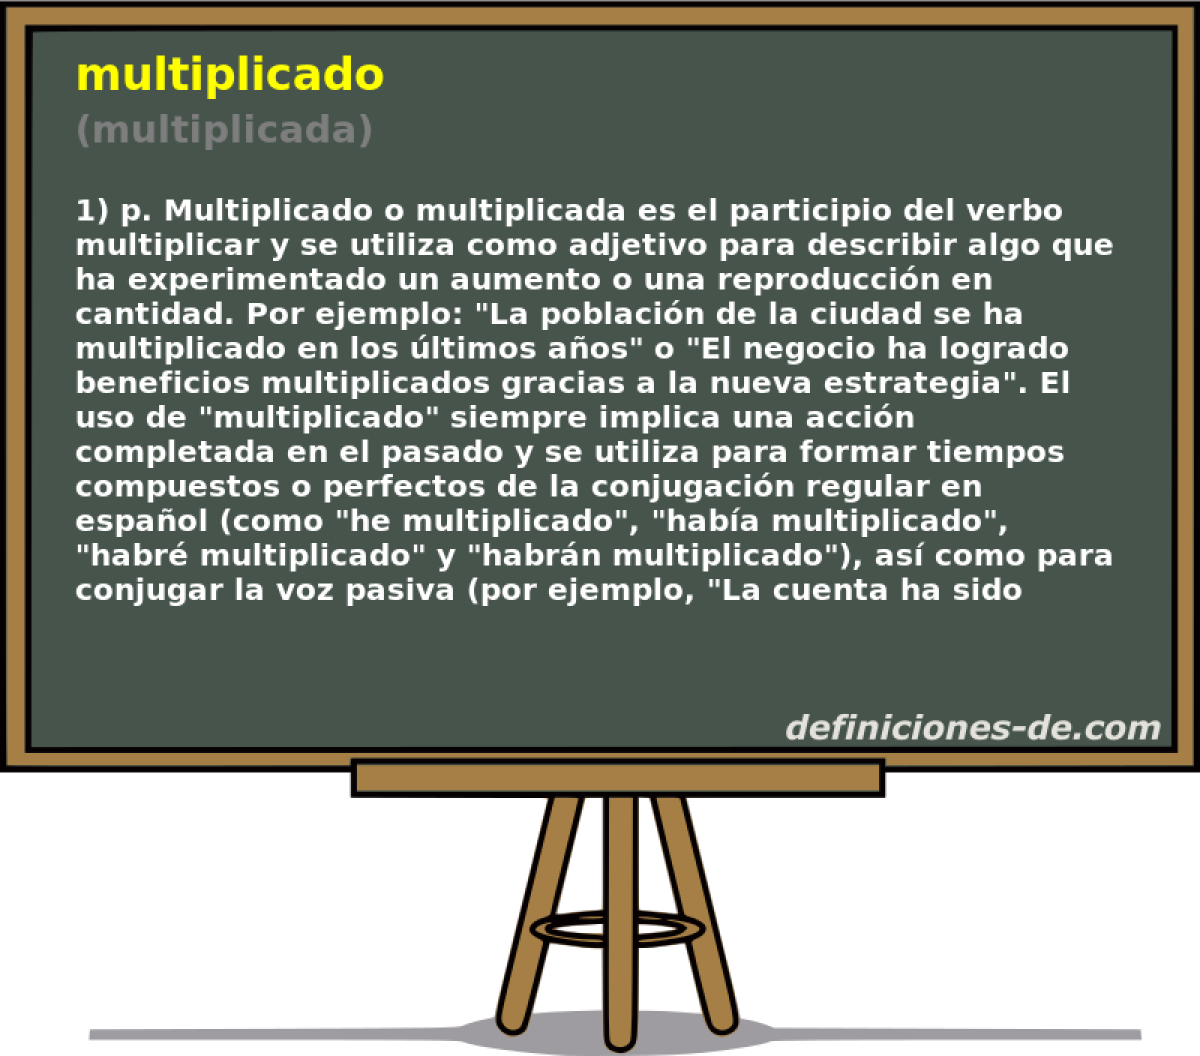 multiplicado (multiplicada)